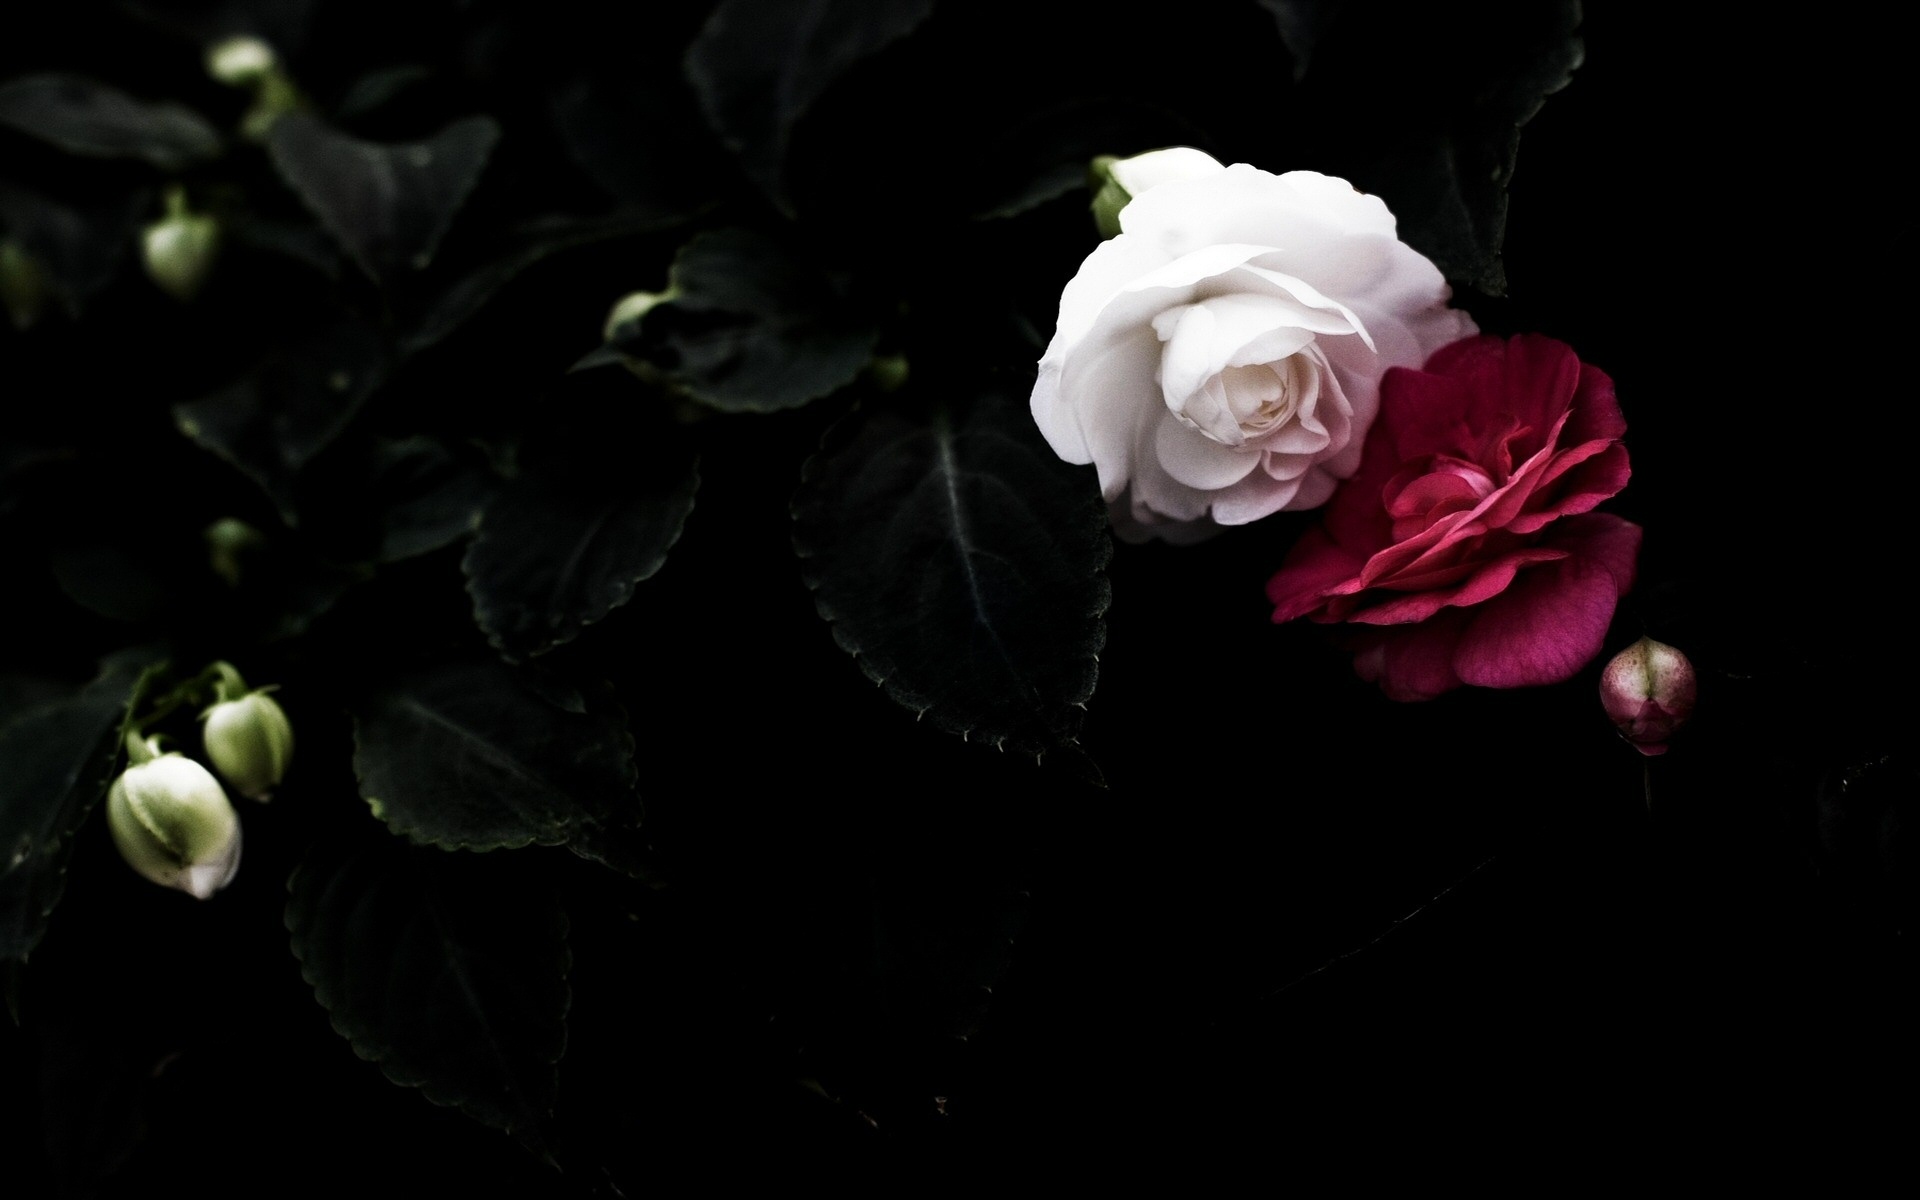 Roses Wallpaper black white leaf pair white red petals roses